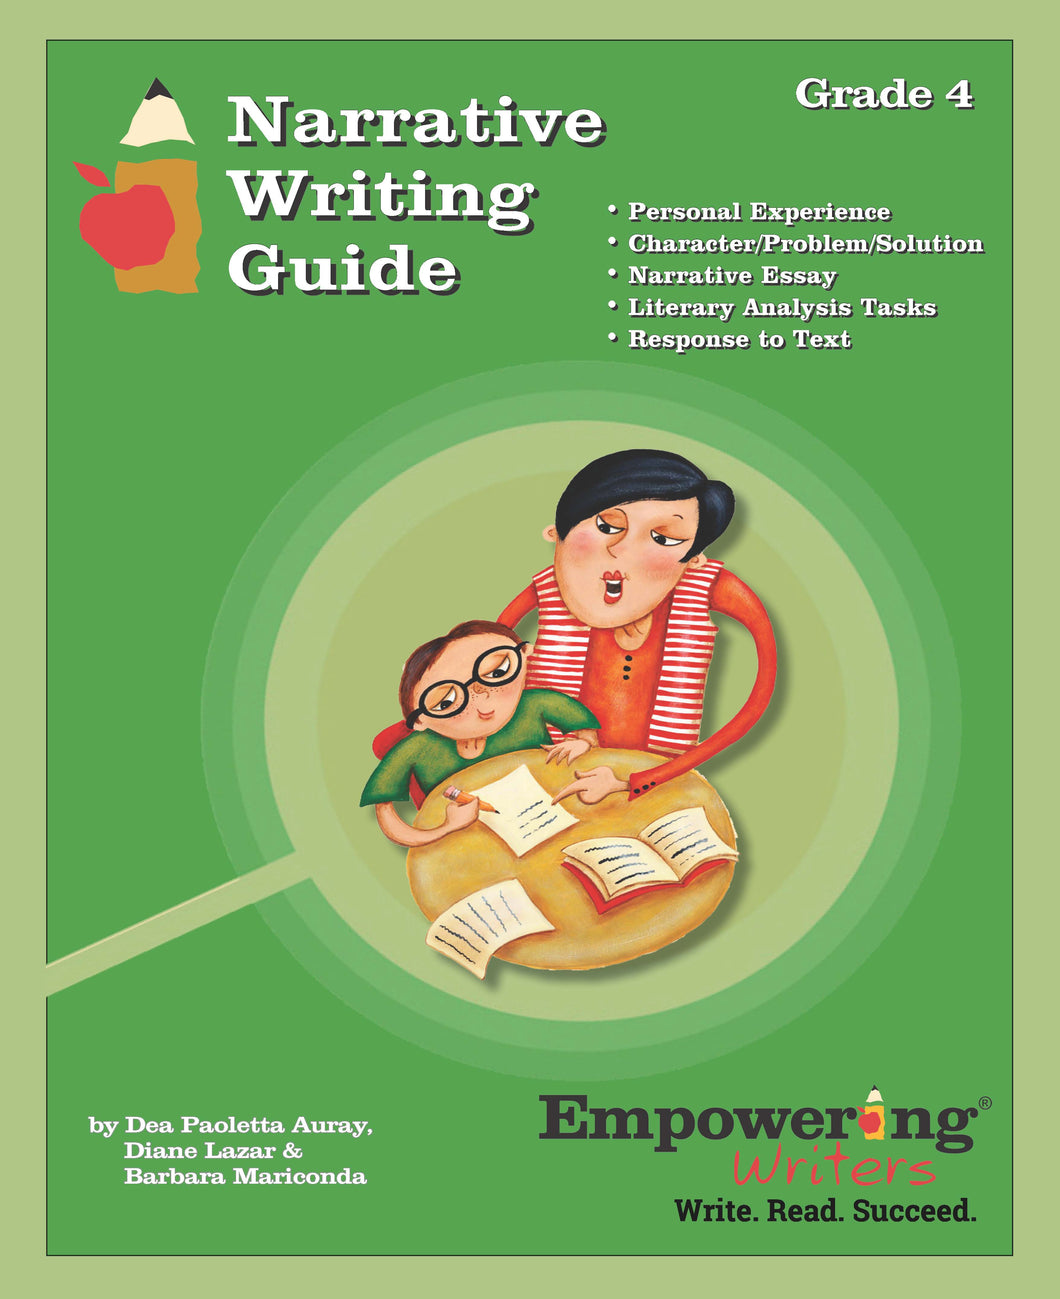 Grade 4 Narrative Writing Guide - Canada (printed)